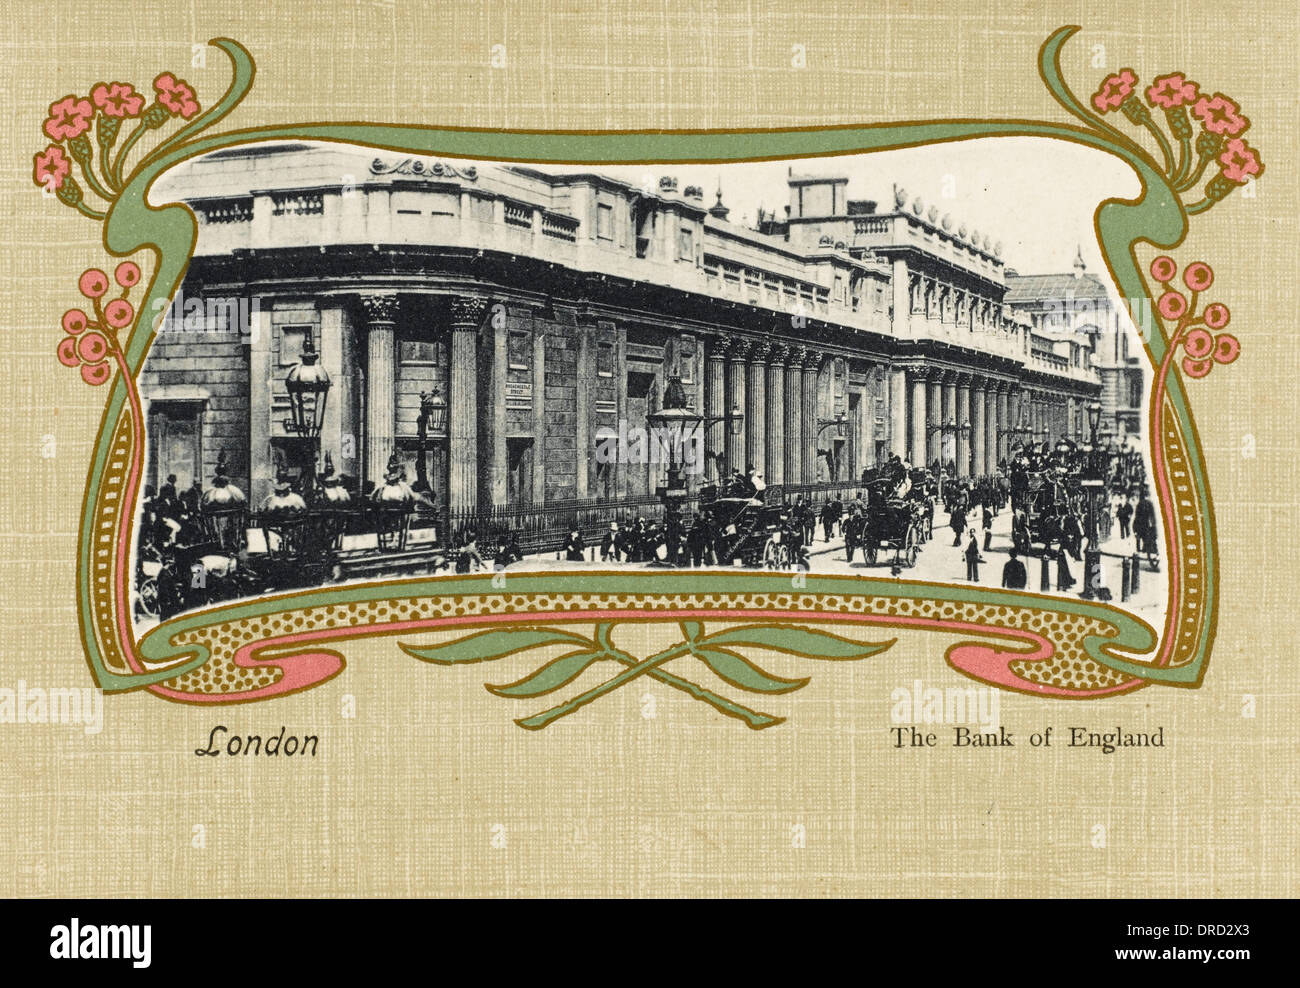 The Bank of England Art Nouveau Border Stock Image